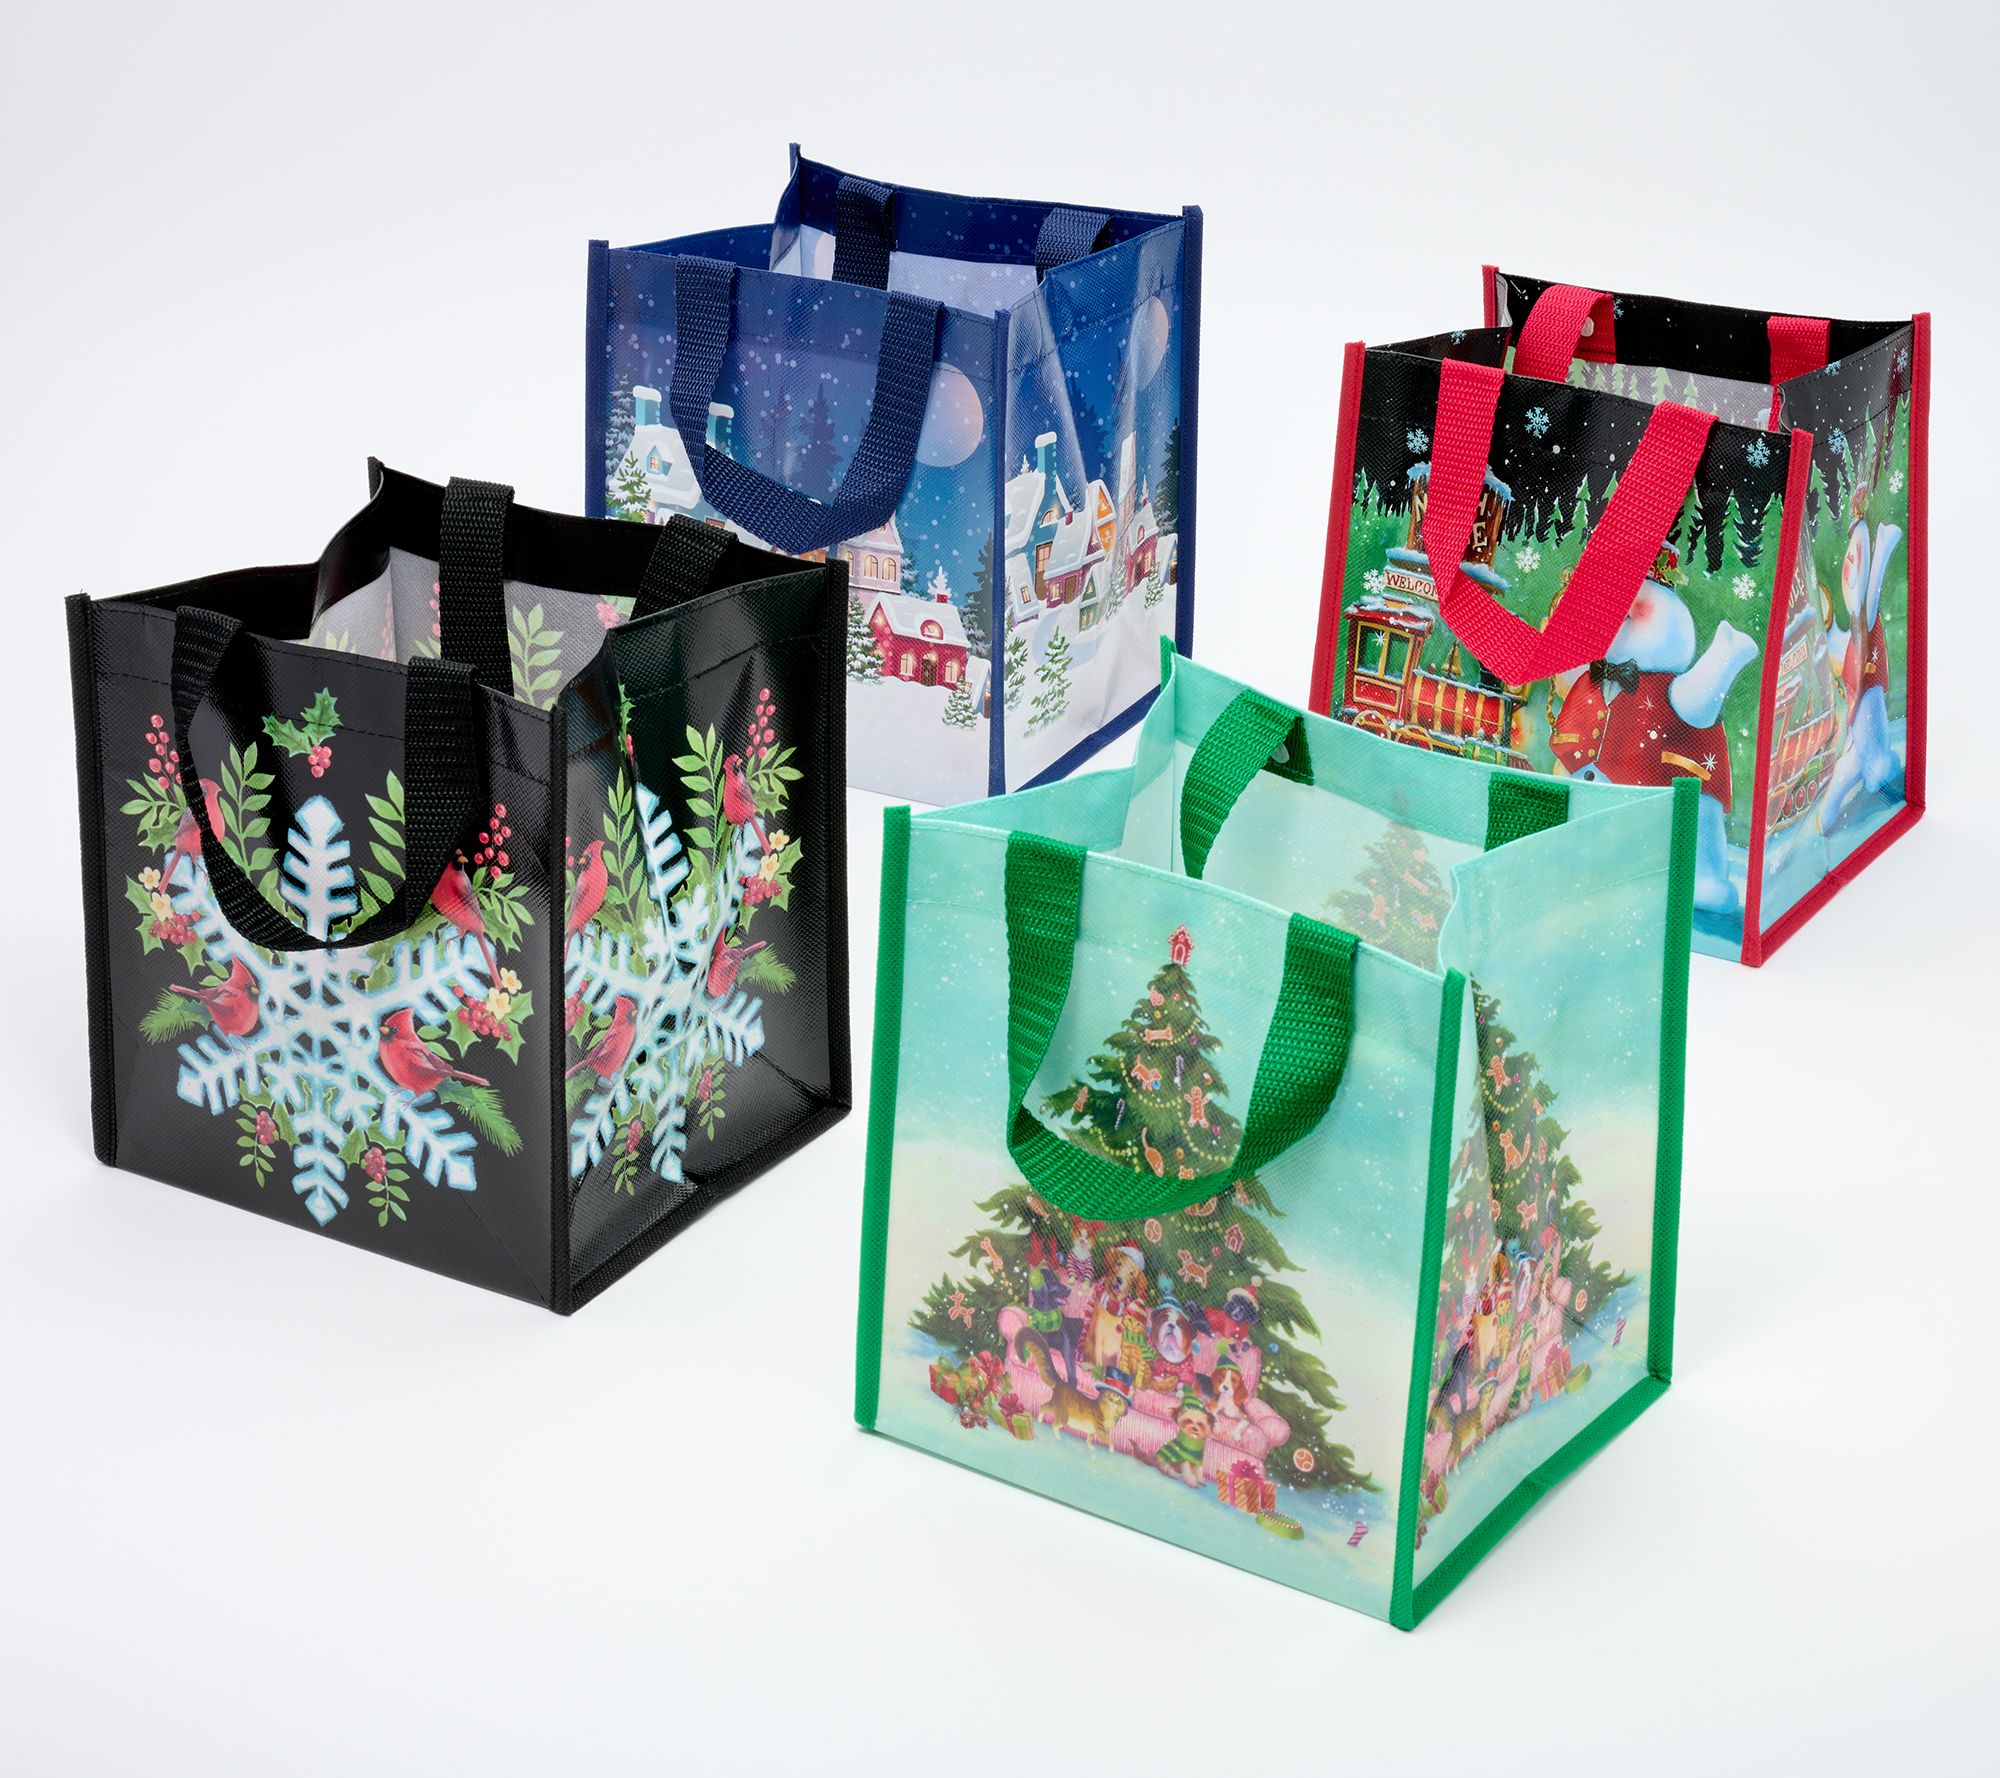 Unique Bargains Paper Gift Bag with Transparent Window Pack Bouquet Bag Pink